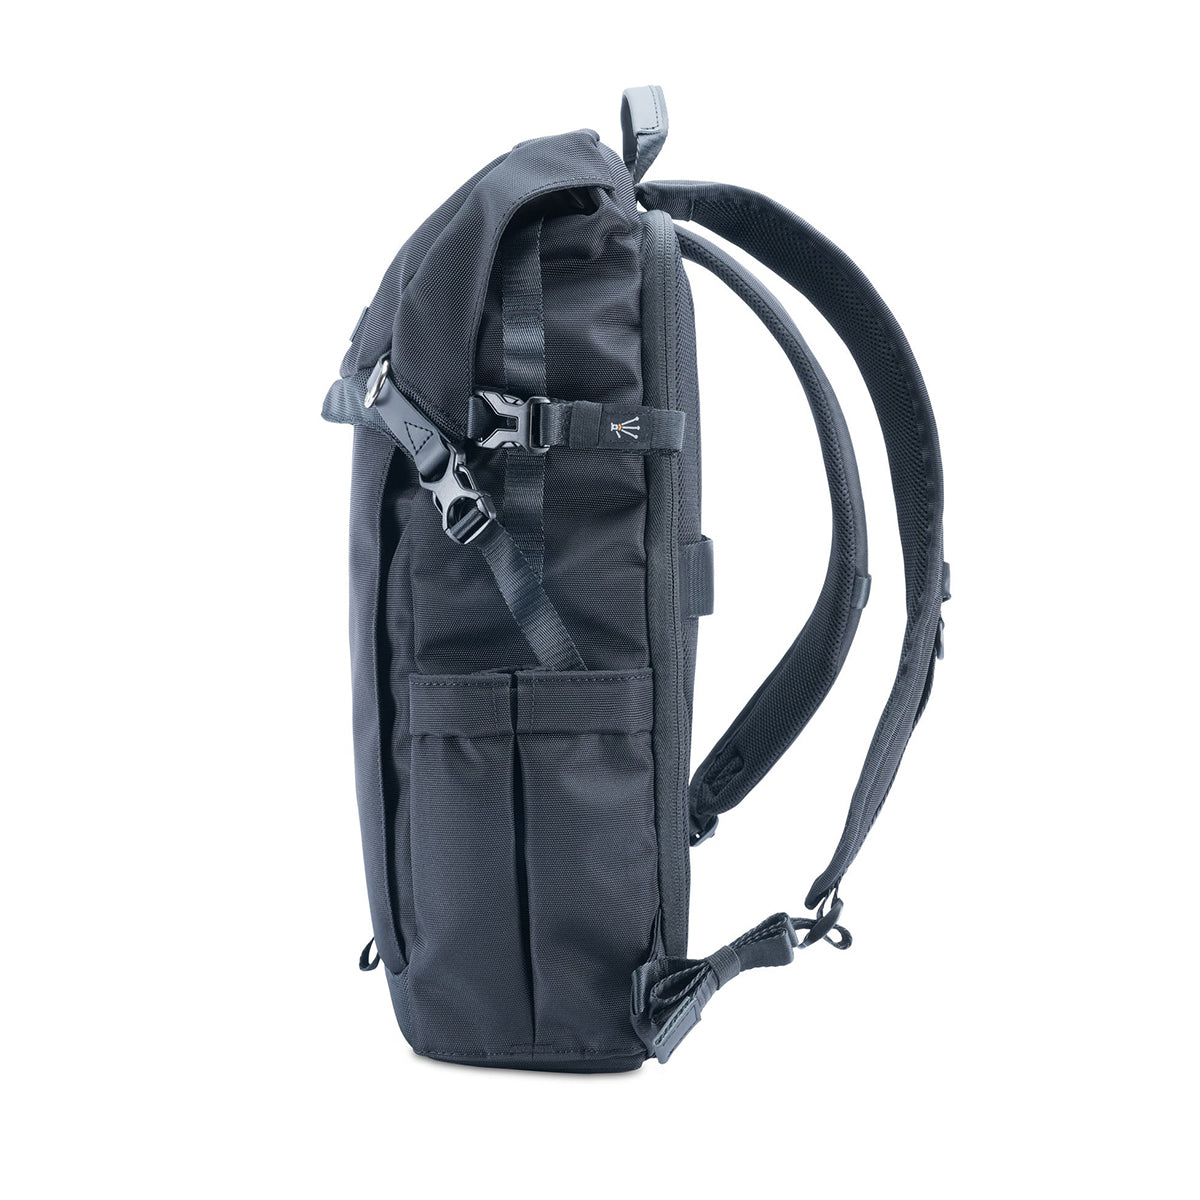 Vanguard VEO GO 46M BK Slim/Stylish, Rear-Access Camera Backpack - Black